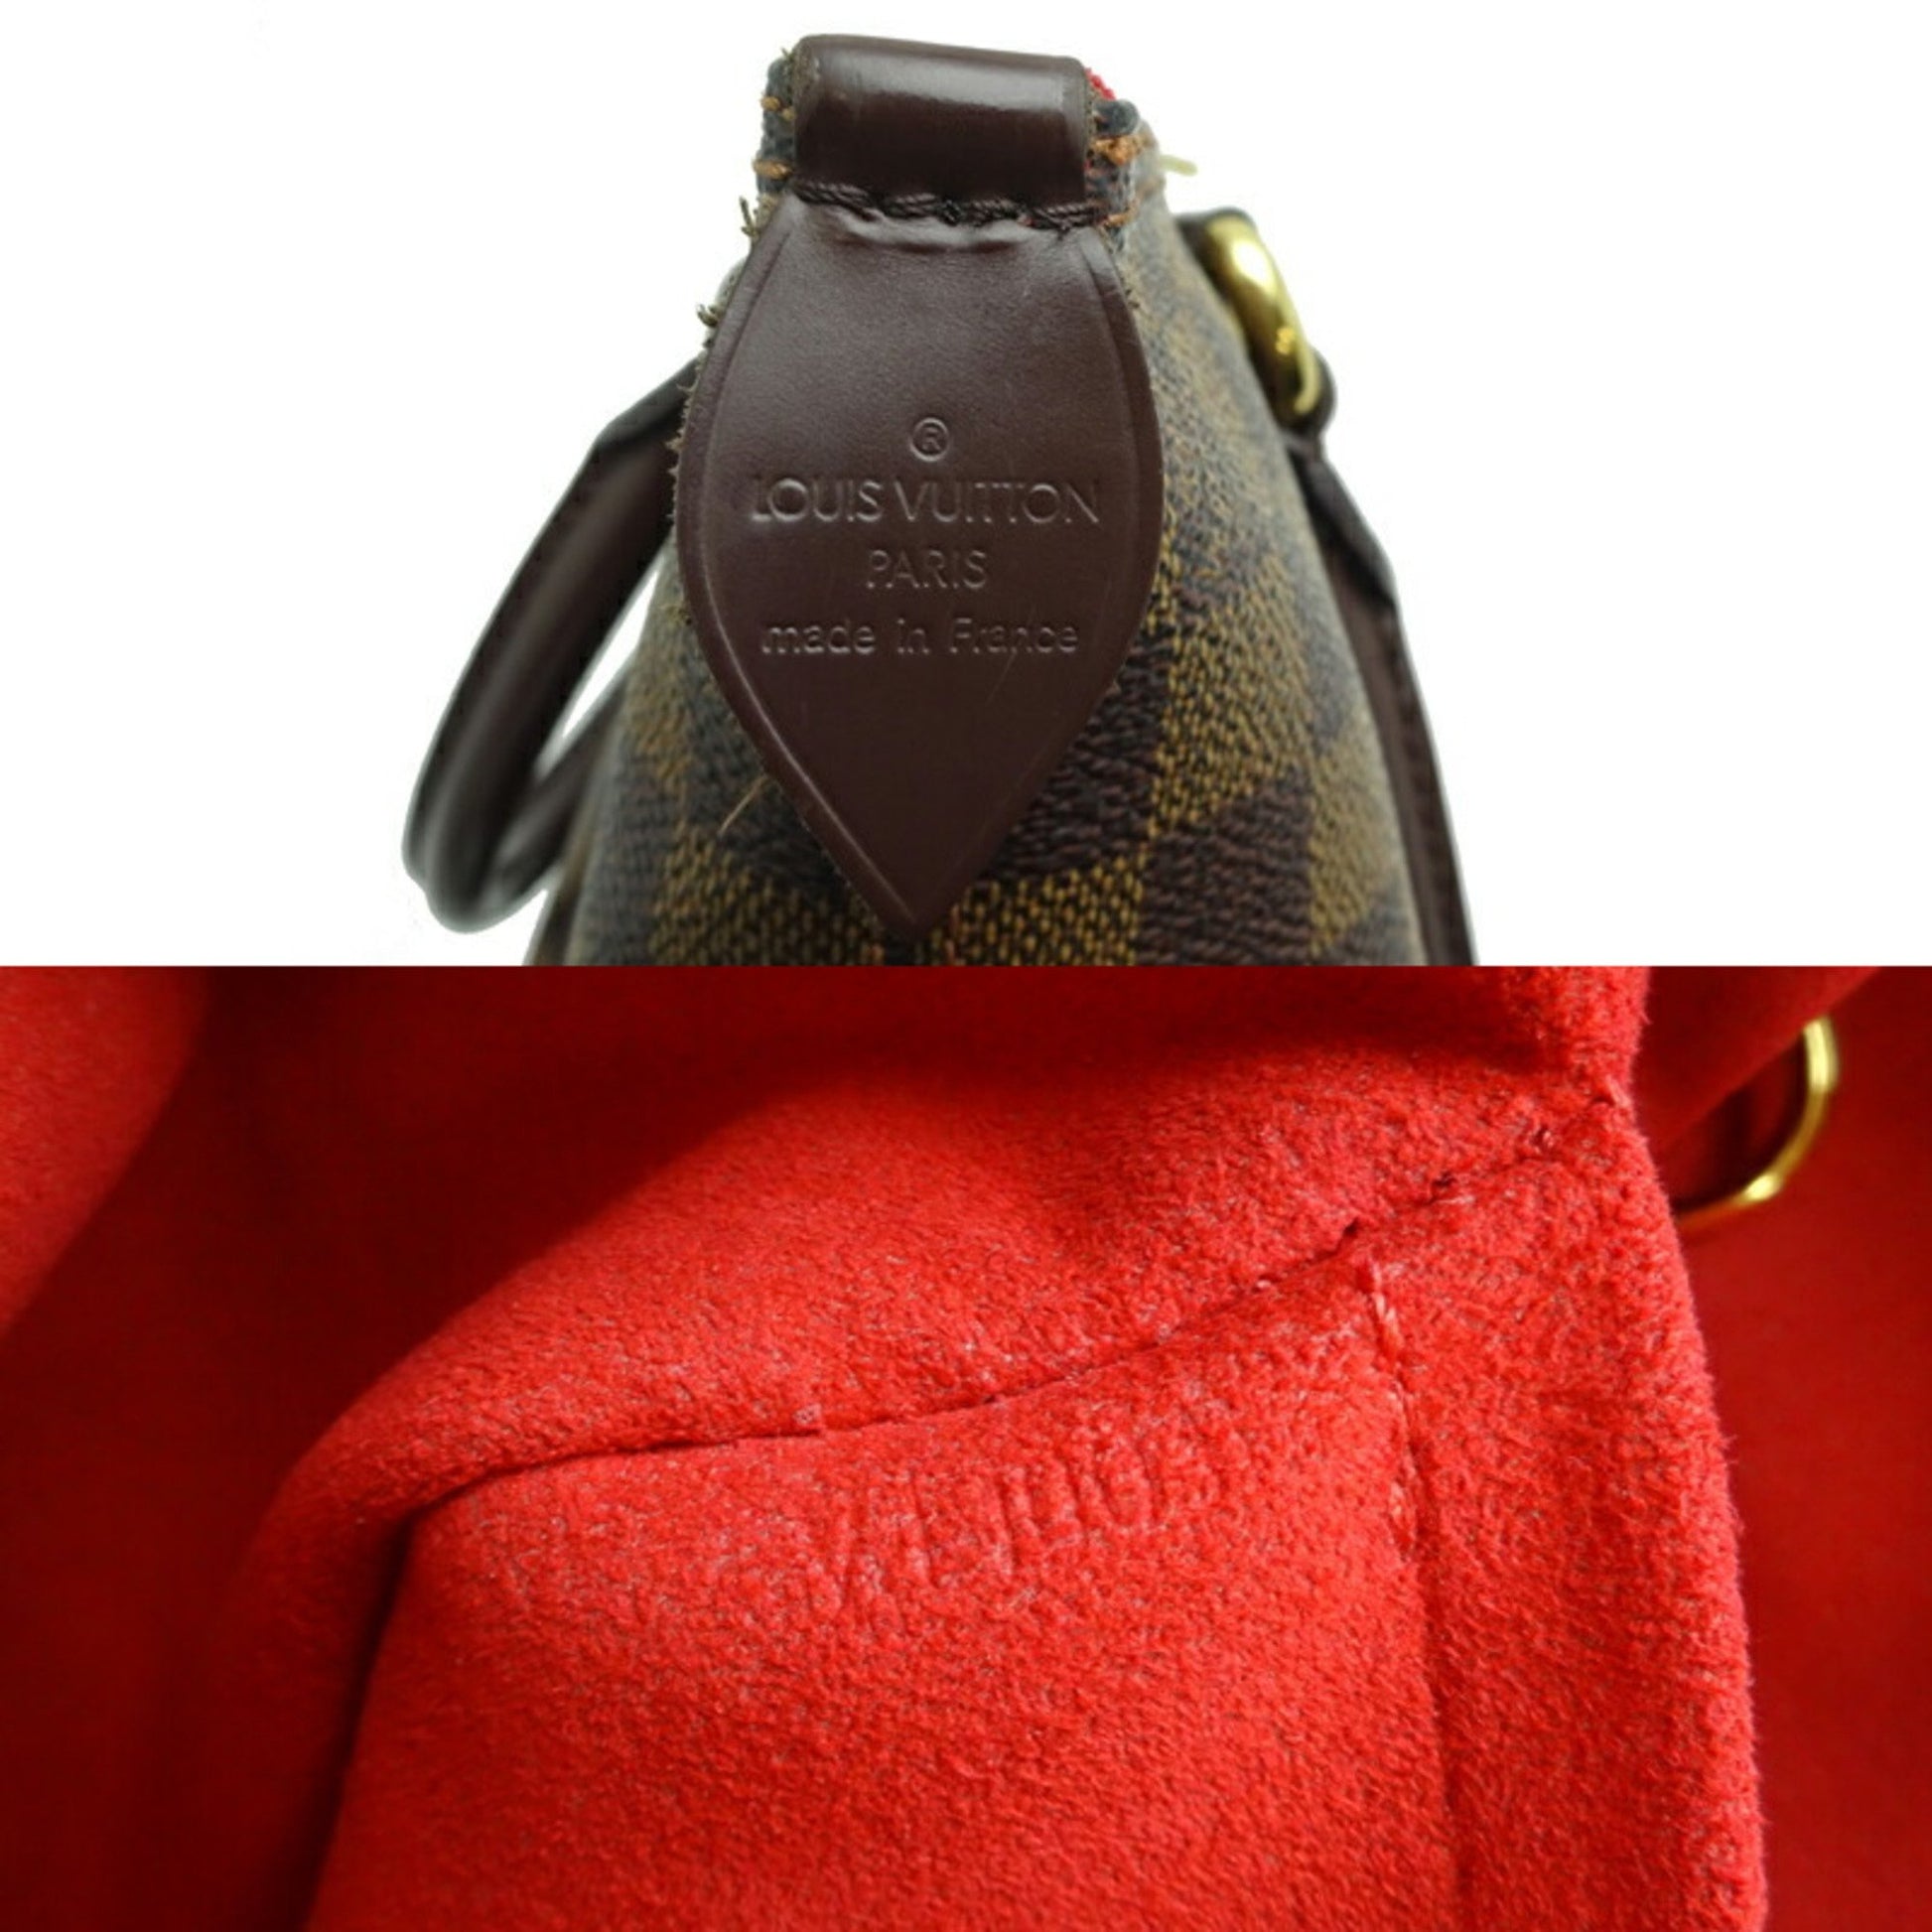 Louis Vuitton Saleya PM Women's Tote Bag N51183 Damier Ebene (Brown)